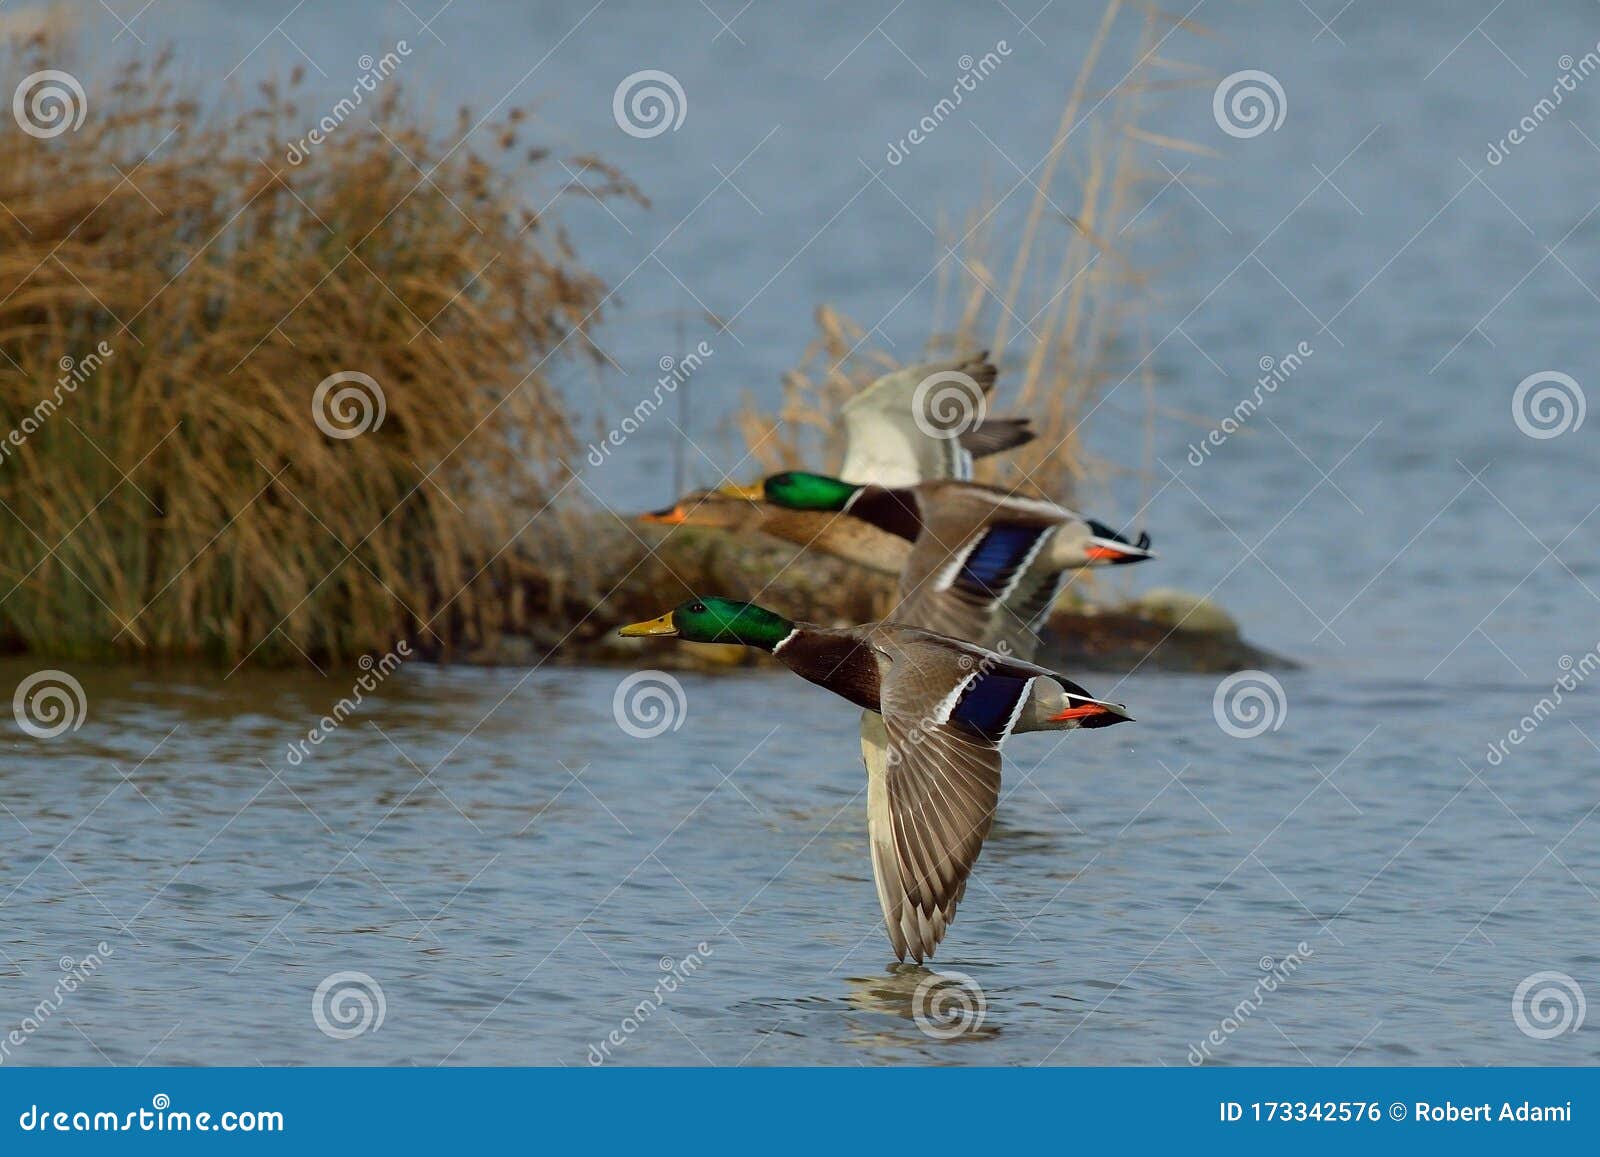 Mallard Ducks Flying With Spread Wings Over Lake Stock Photo Image Of Orange Blue 173342576,Nasturtium Climbing